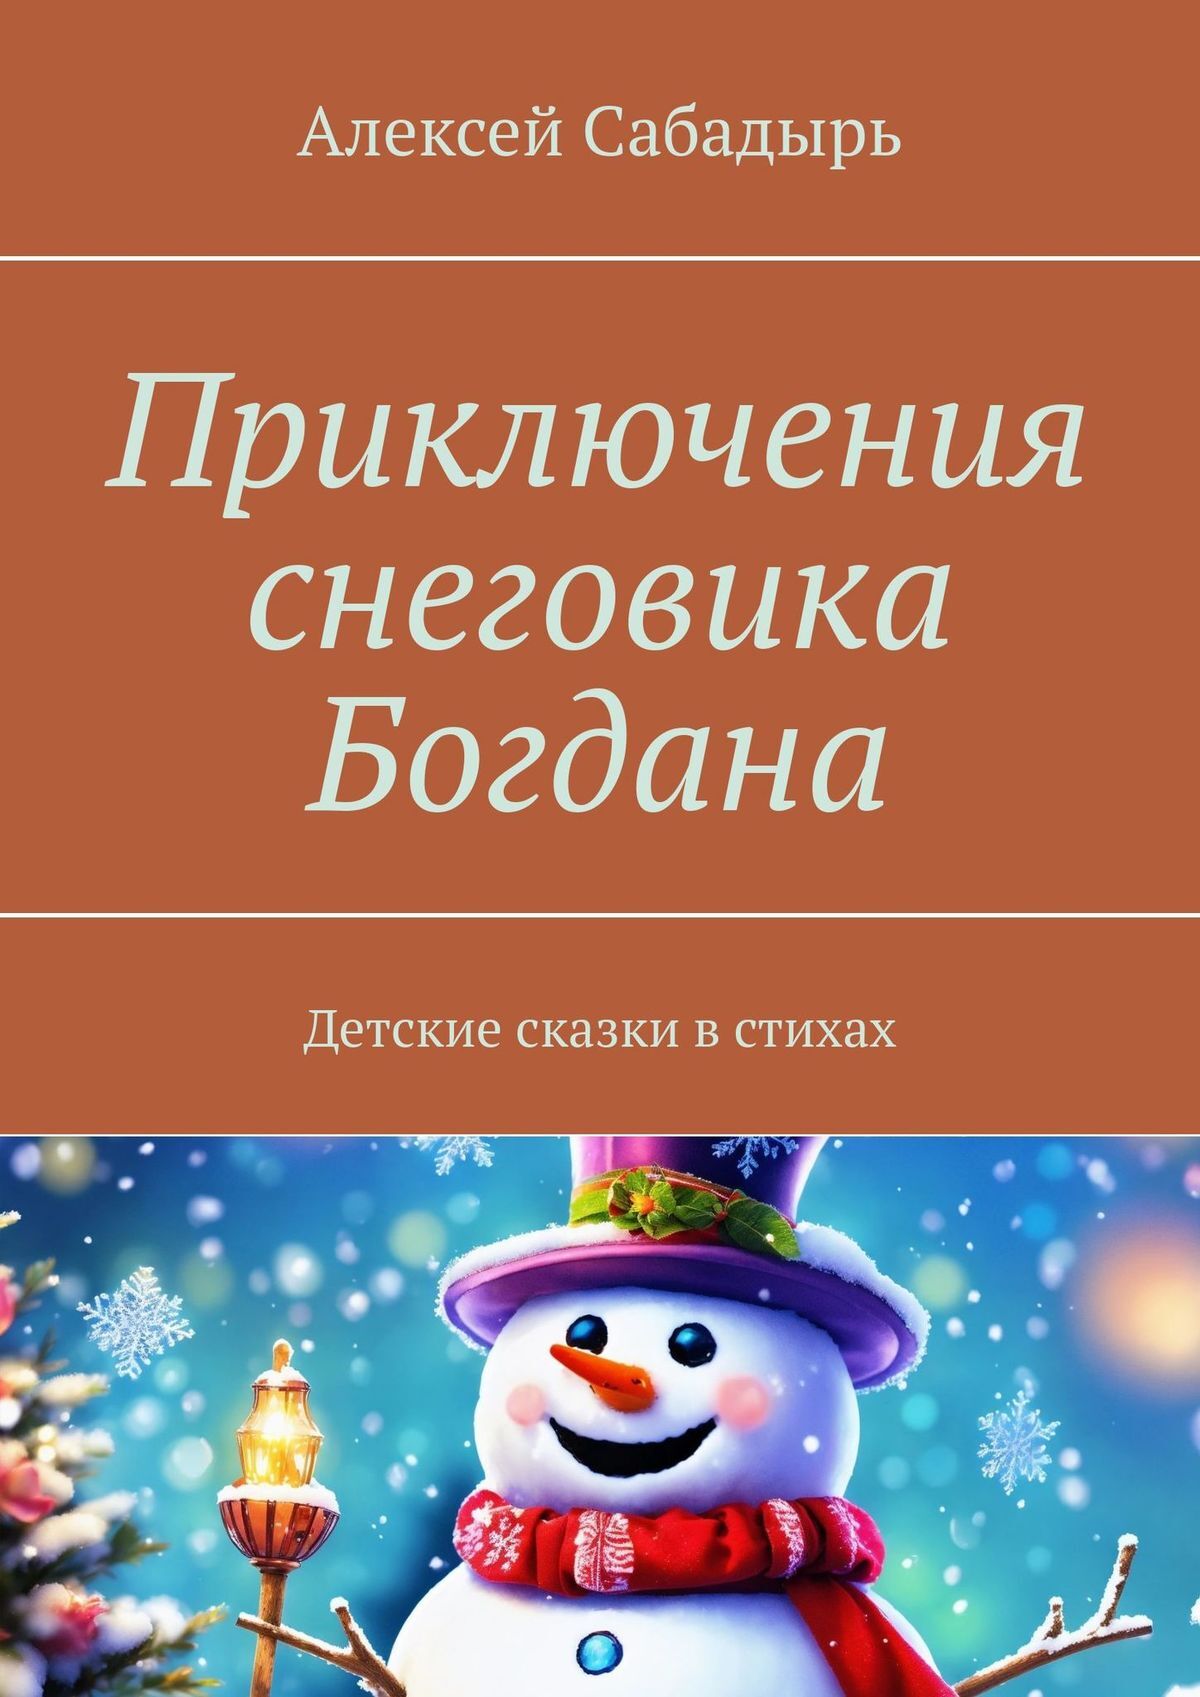 Снеговик — Википедия